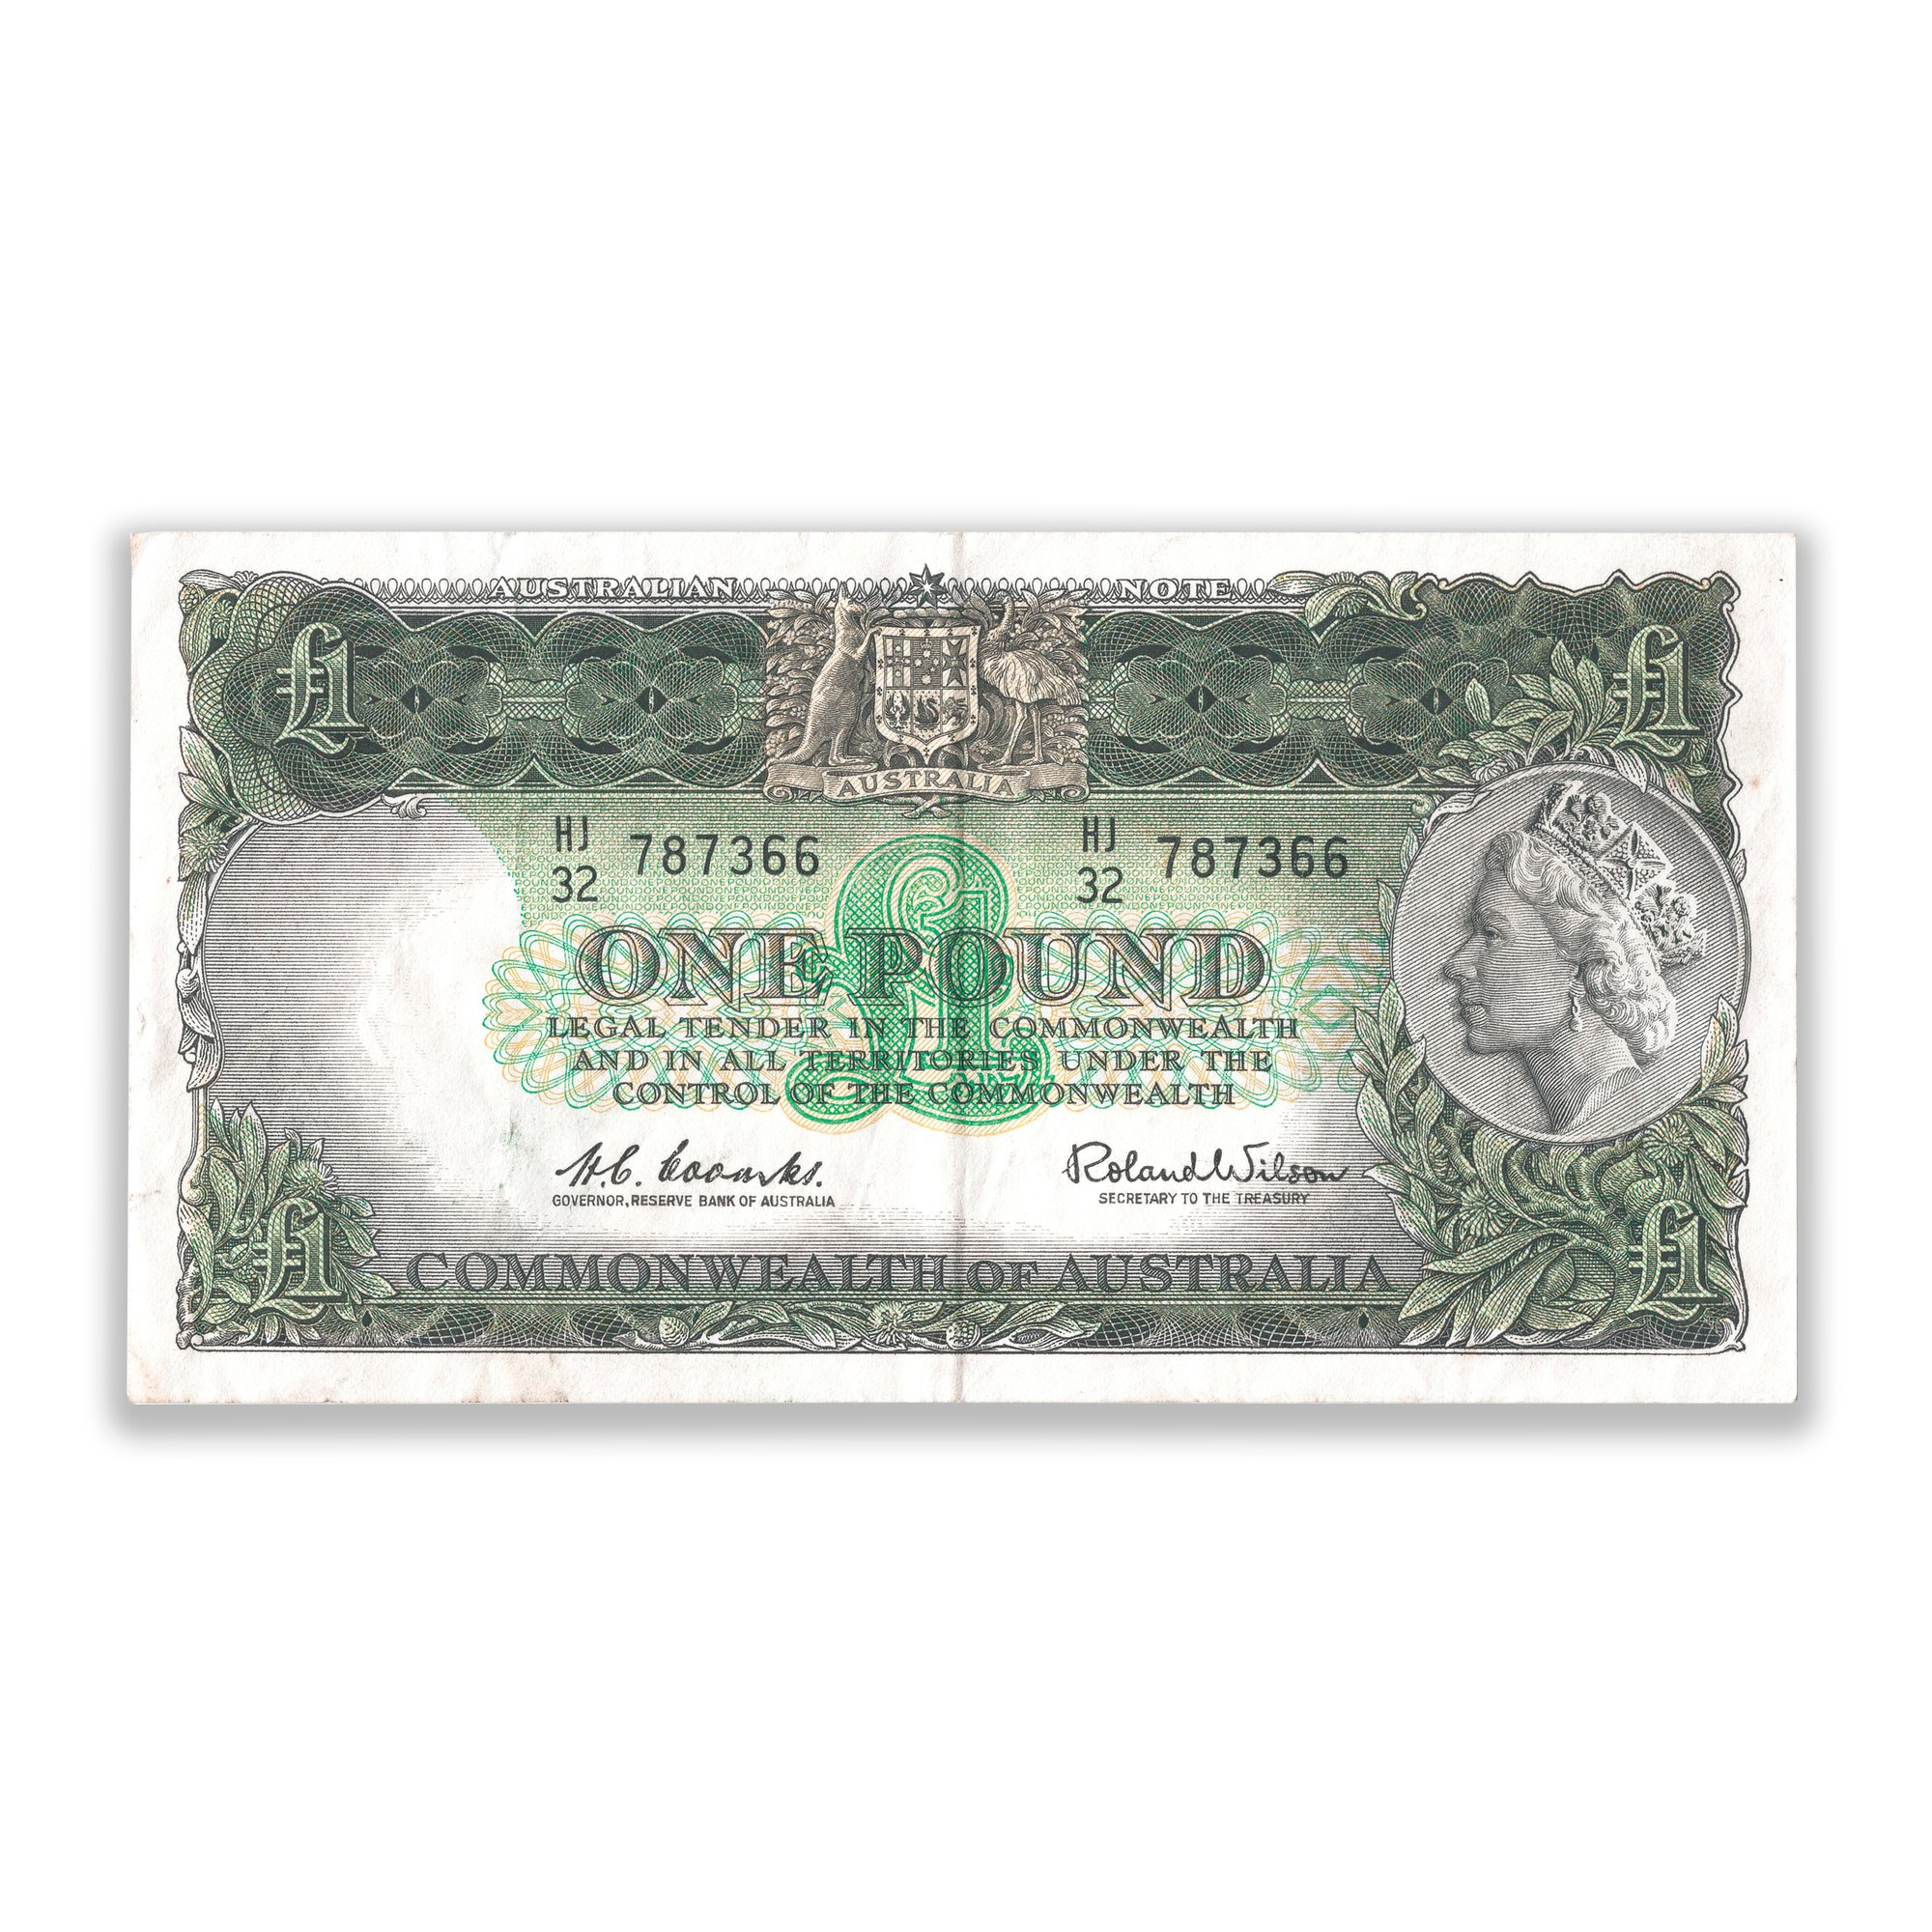 R34b 1961 One Pound Banknote Very Fine